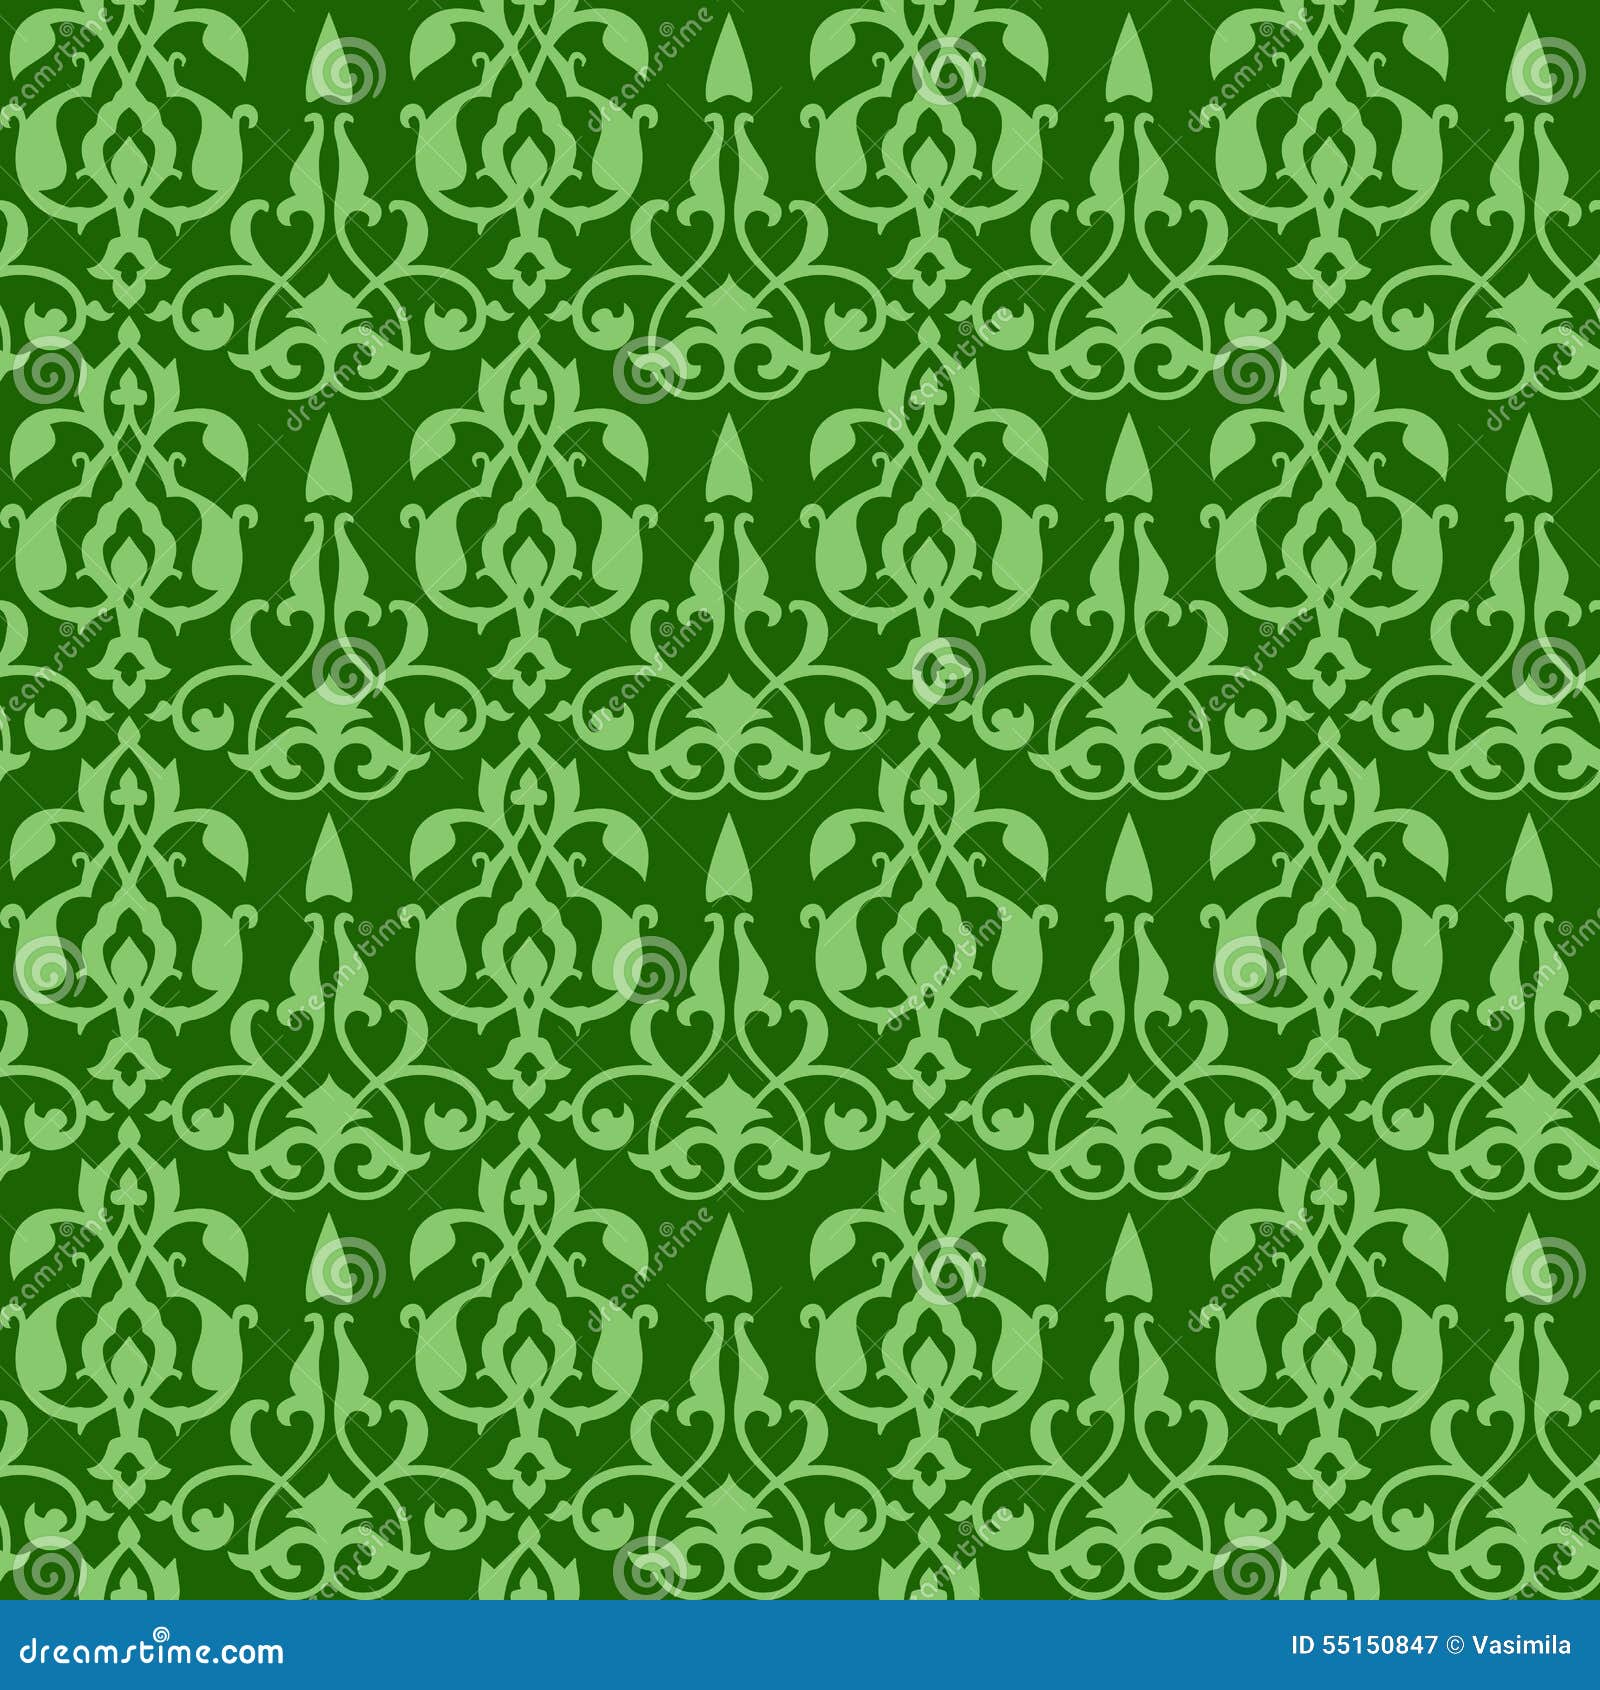 Arabic pattern stock vector. Illustration of ornate, east - 55150847